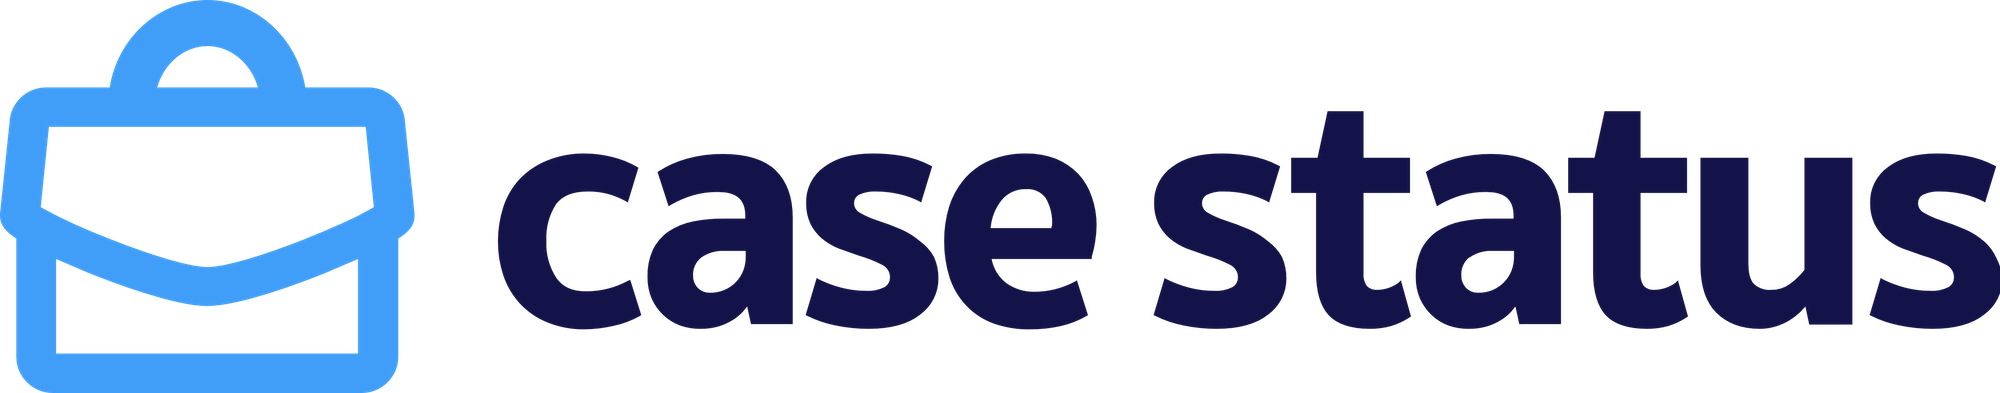 cs-logo-MEDIUM-1